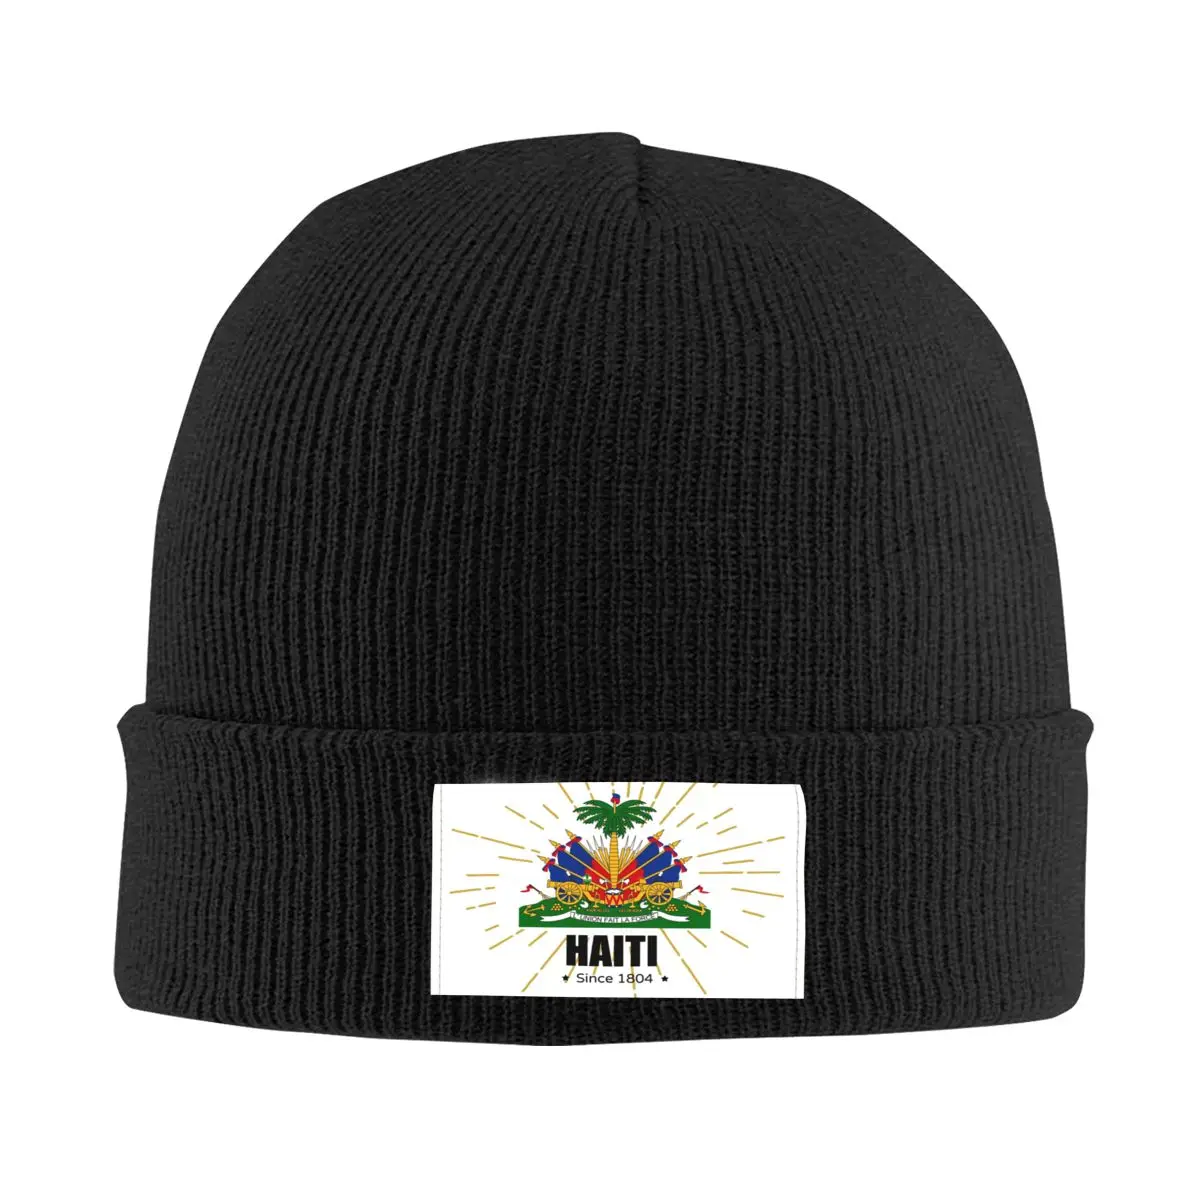 Haiti Since1804 Coat Of Arms Bonnet Hats Street Knit Hat For Women Men Autumn Winter Warm Skullies Beanies Caps 1